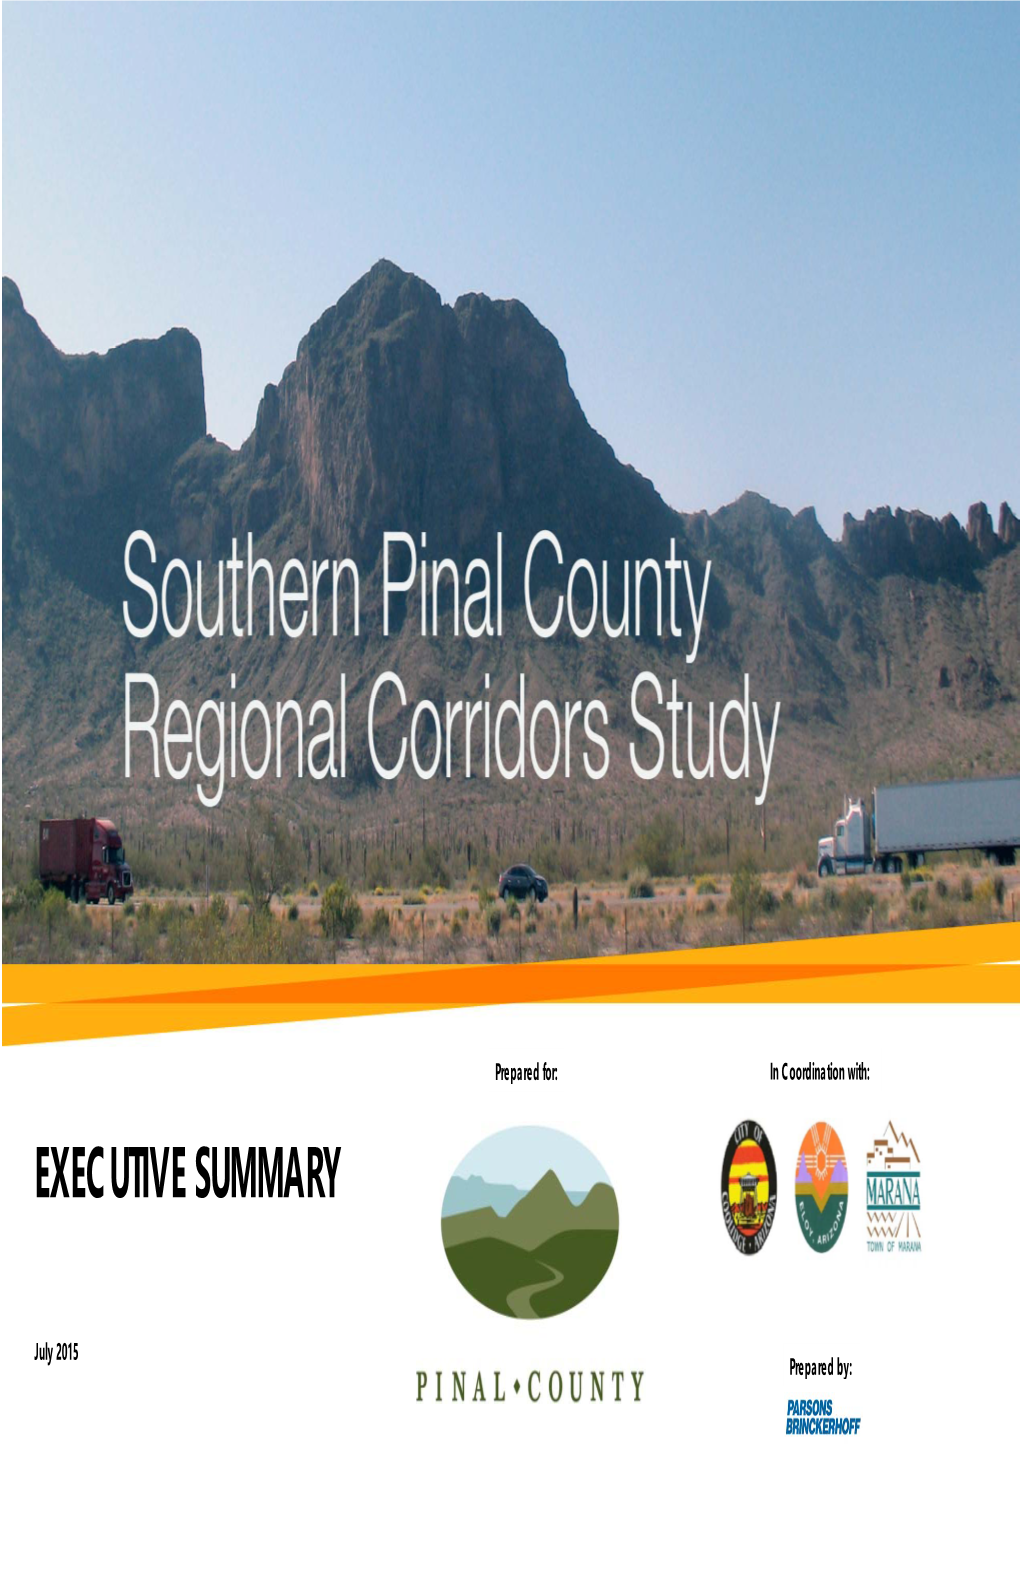 Southern Pinal County Regional Corridor Study Executive Summary